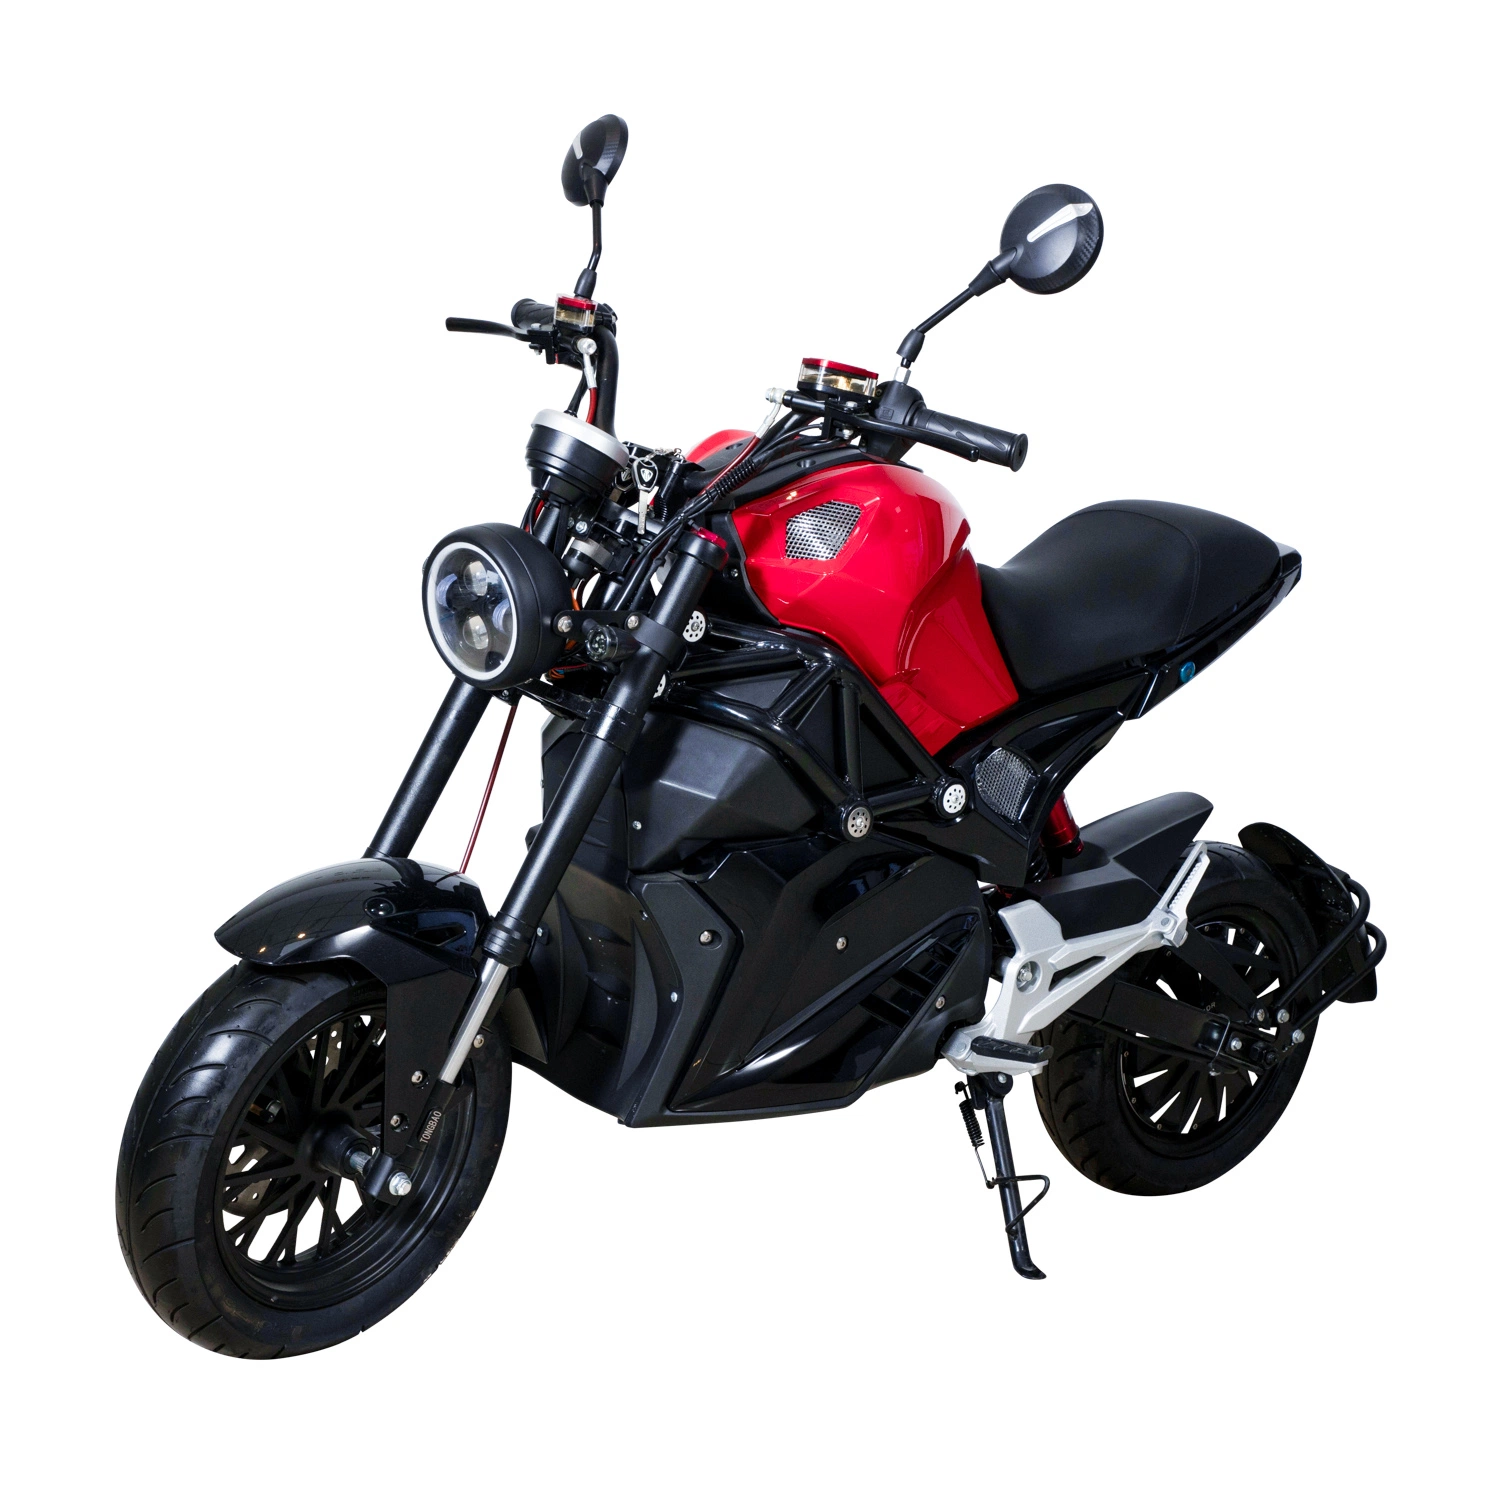 Motocicleta deportiva / 150cc Moto / 150cc Scooter / 125 Scooter CC / 100cc motocicleta / 125 cc bicicleta de tierra